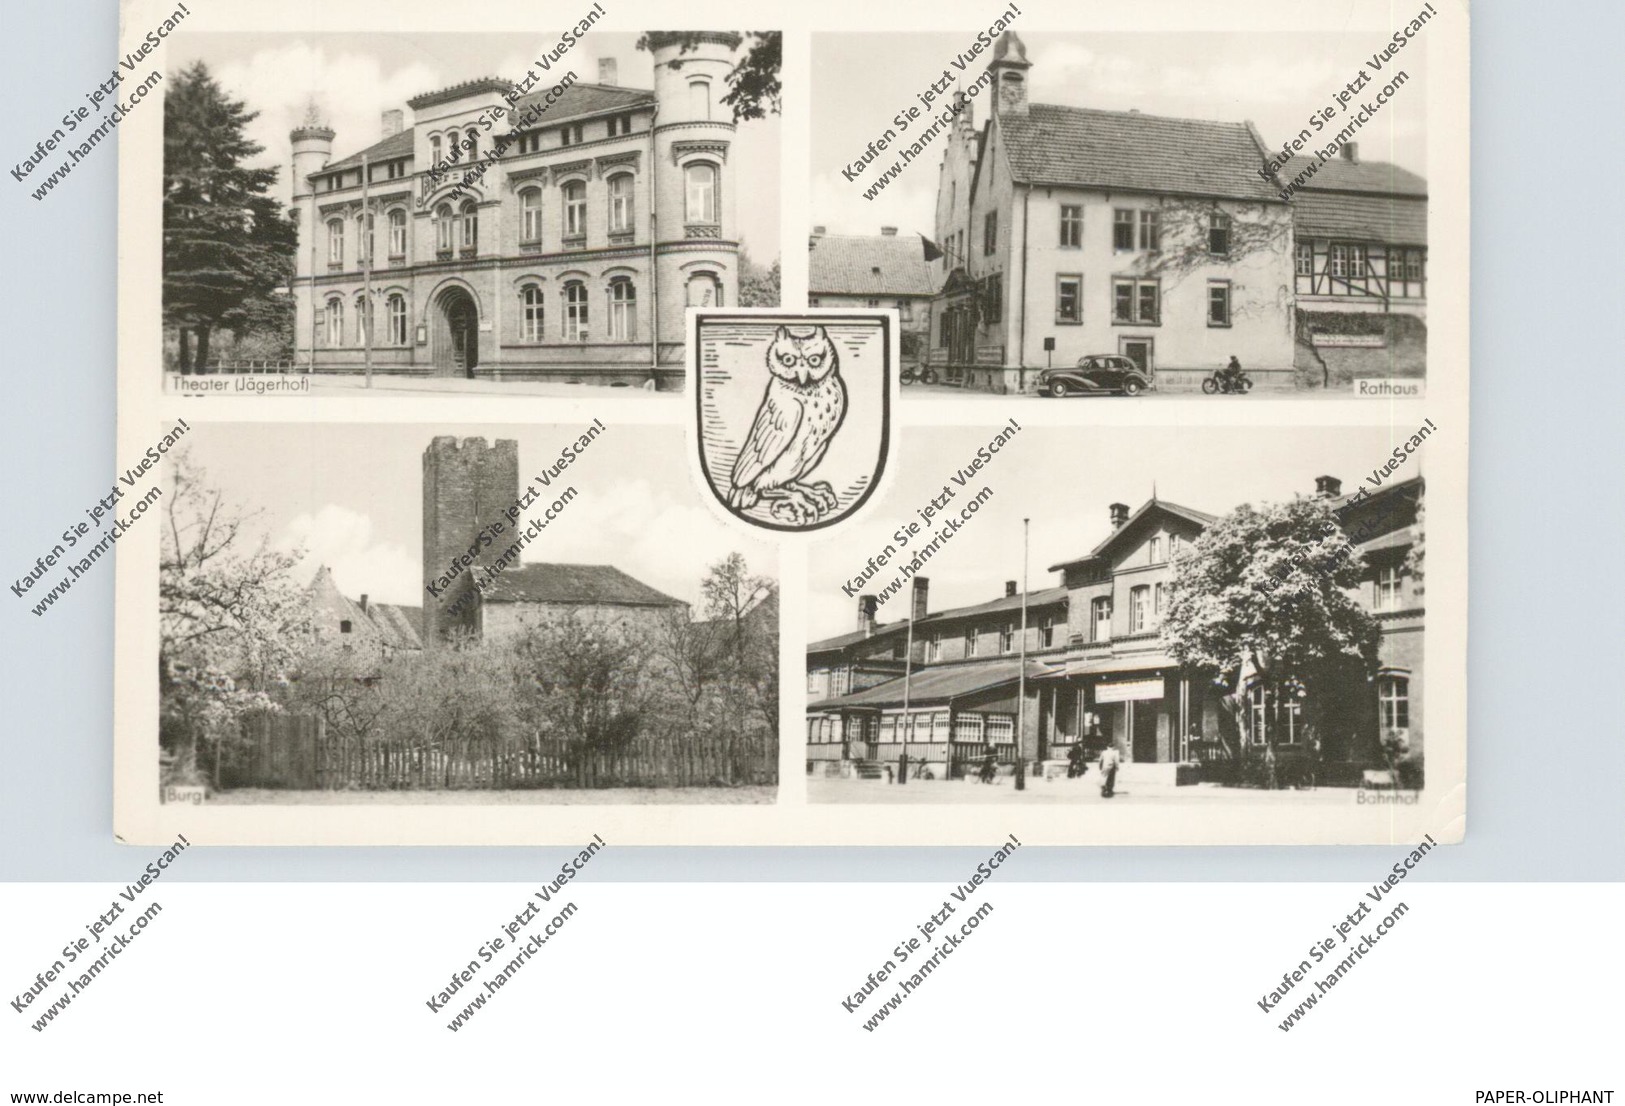 0-3573 OEBISFELDE, Theater Jägerhof, Rathaus, Bahnhof, Burg, Stadtwappen, 1959 - Haldensleben